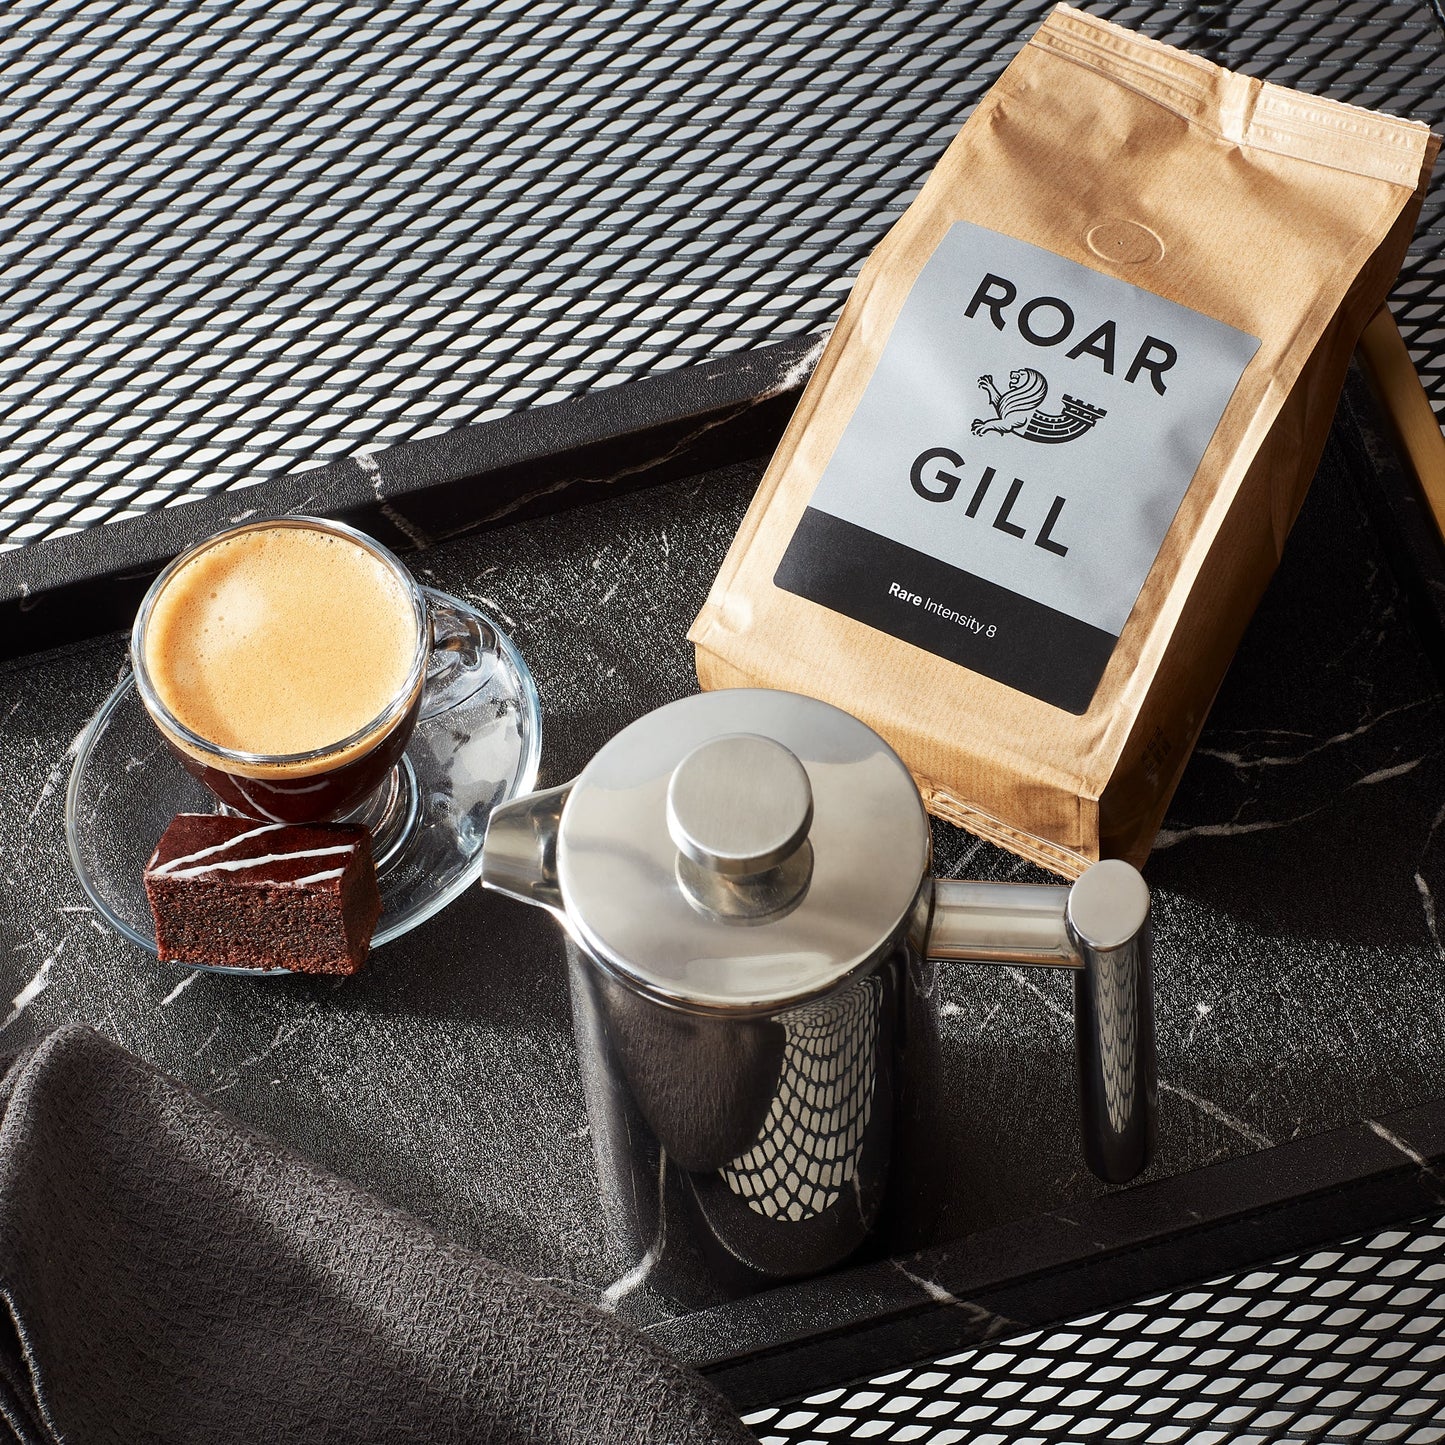 Rare Daterra Medium Ground Coffee Roar Gill